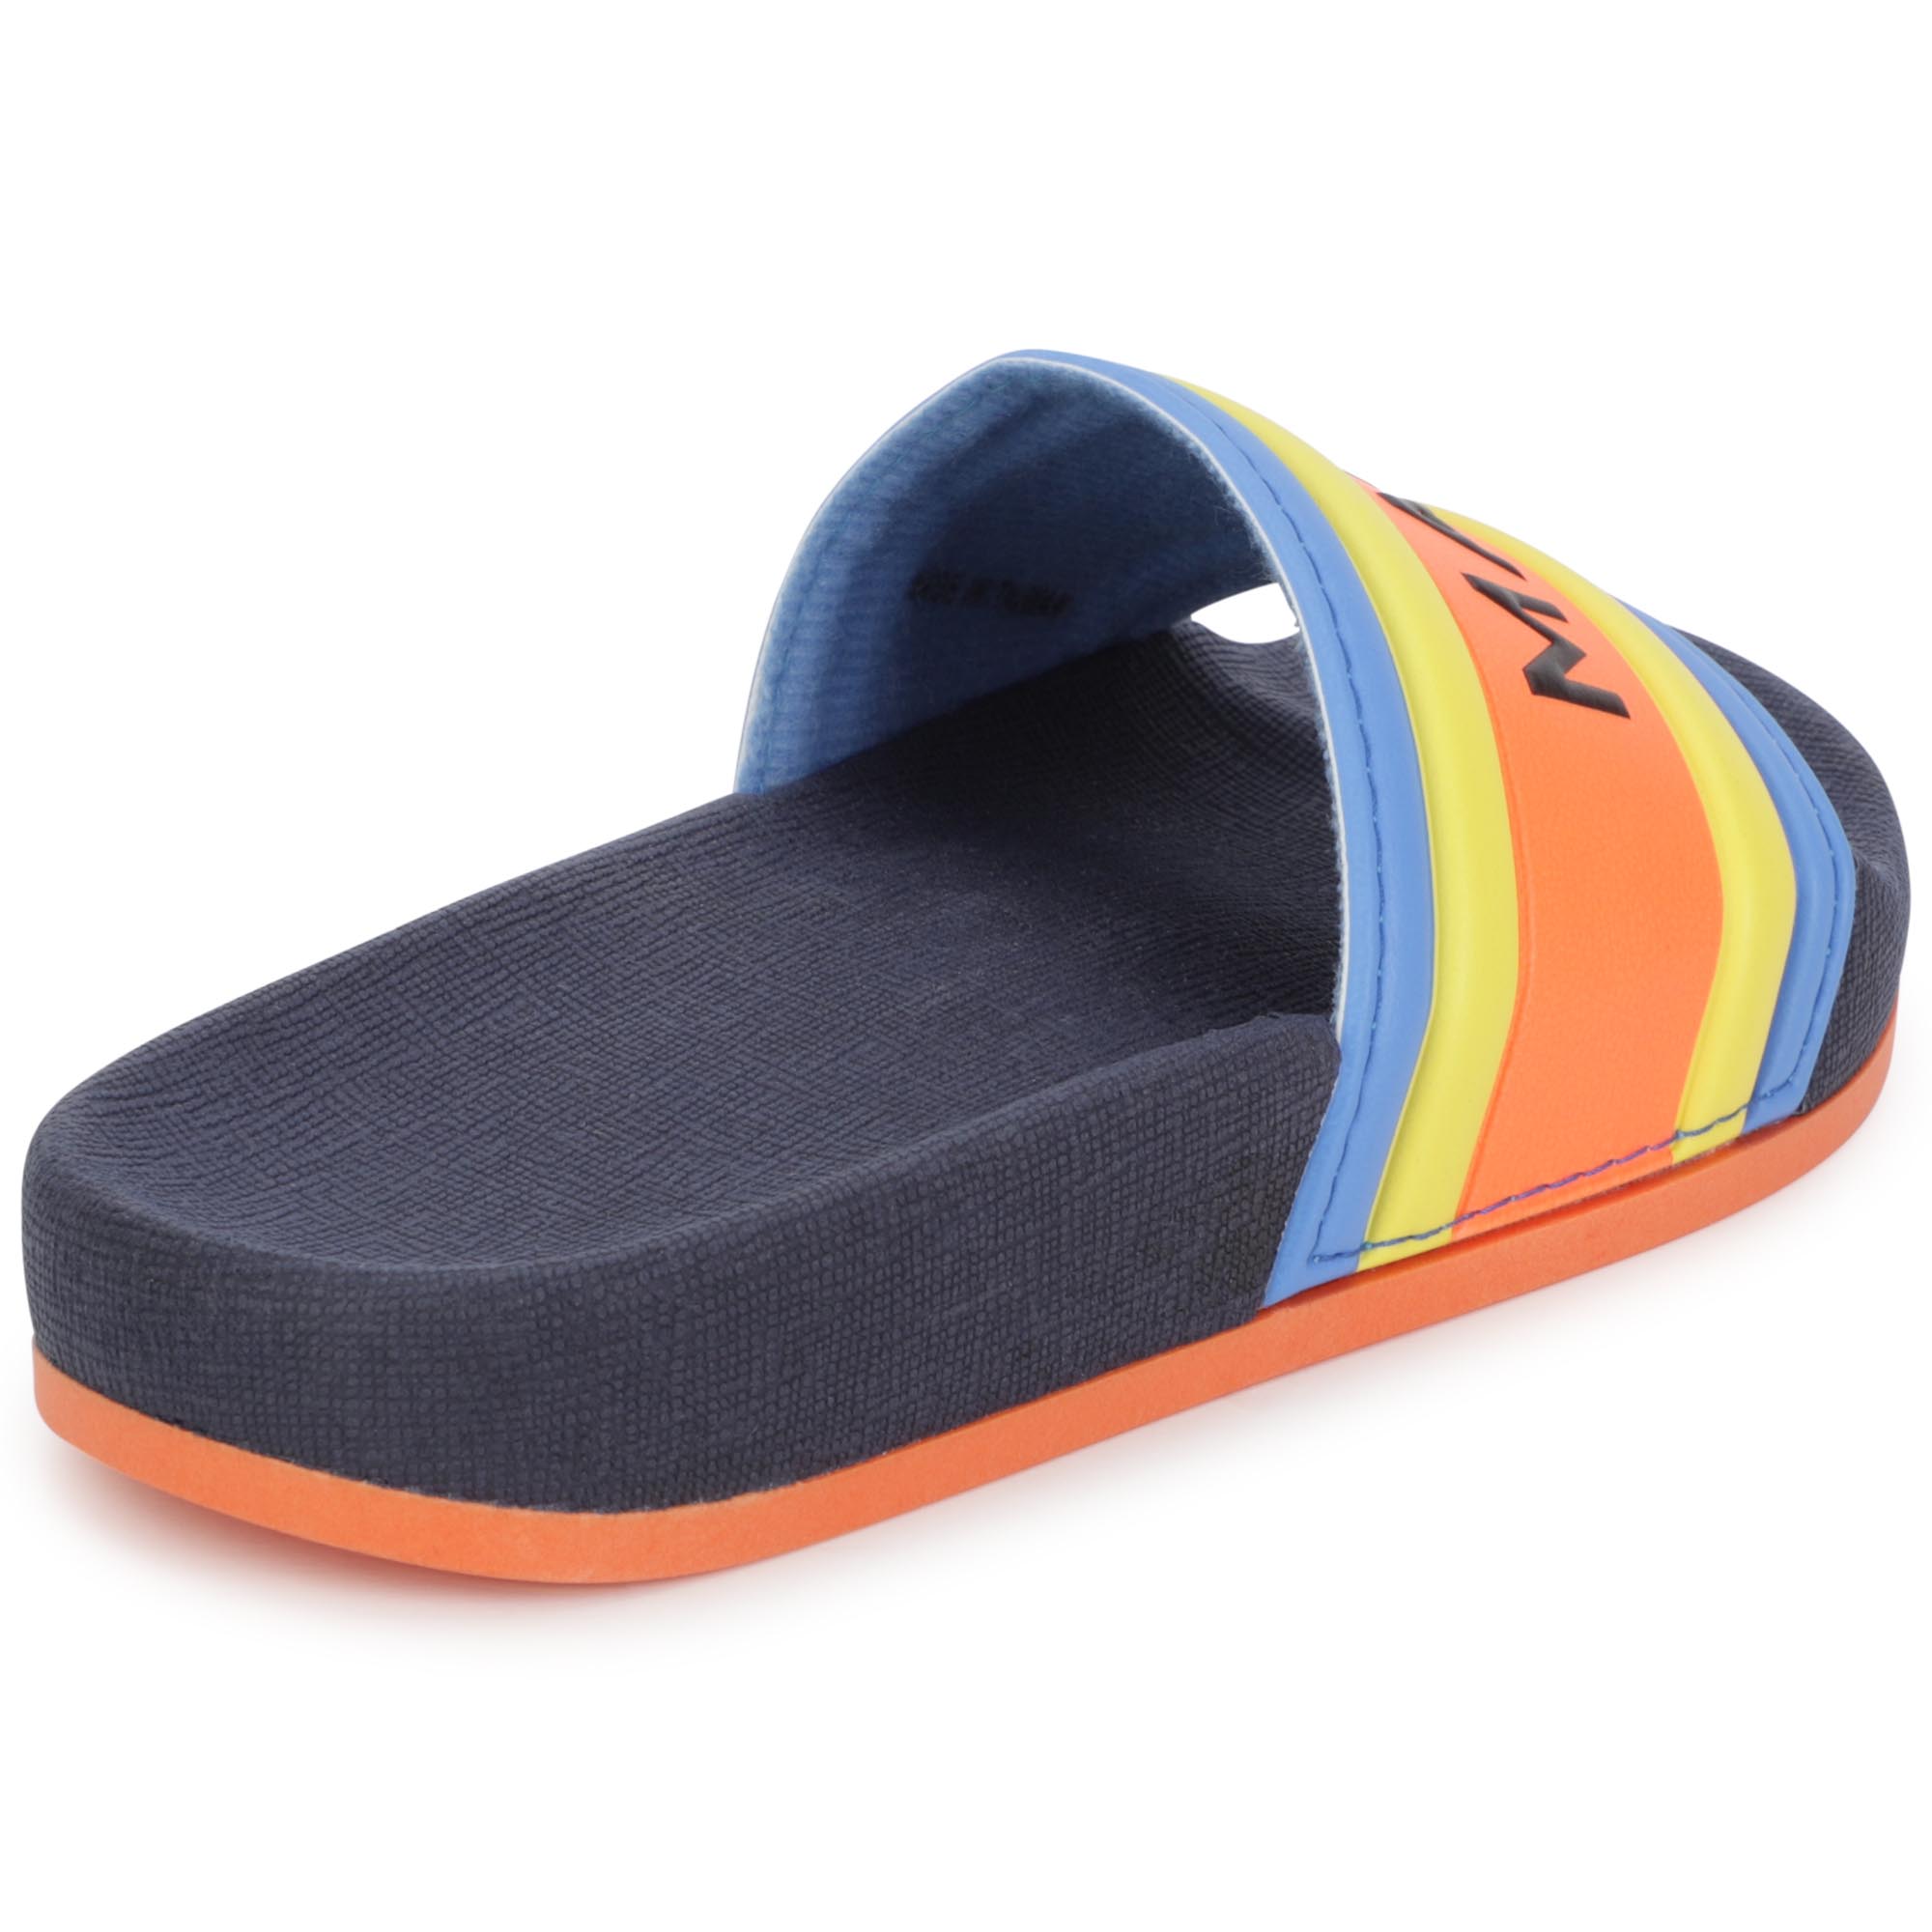 Plastic slide sandals MARC JACOBS for BOY